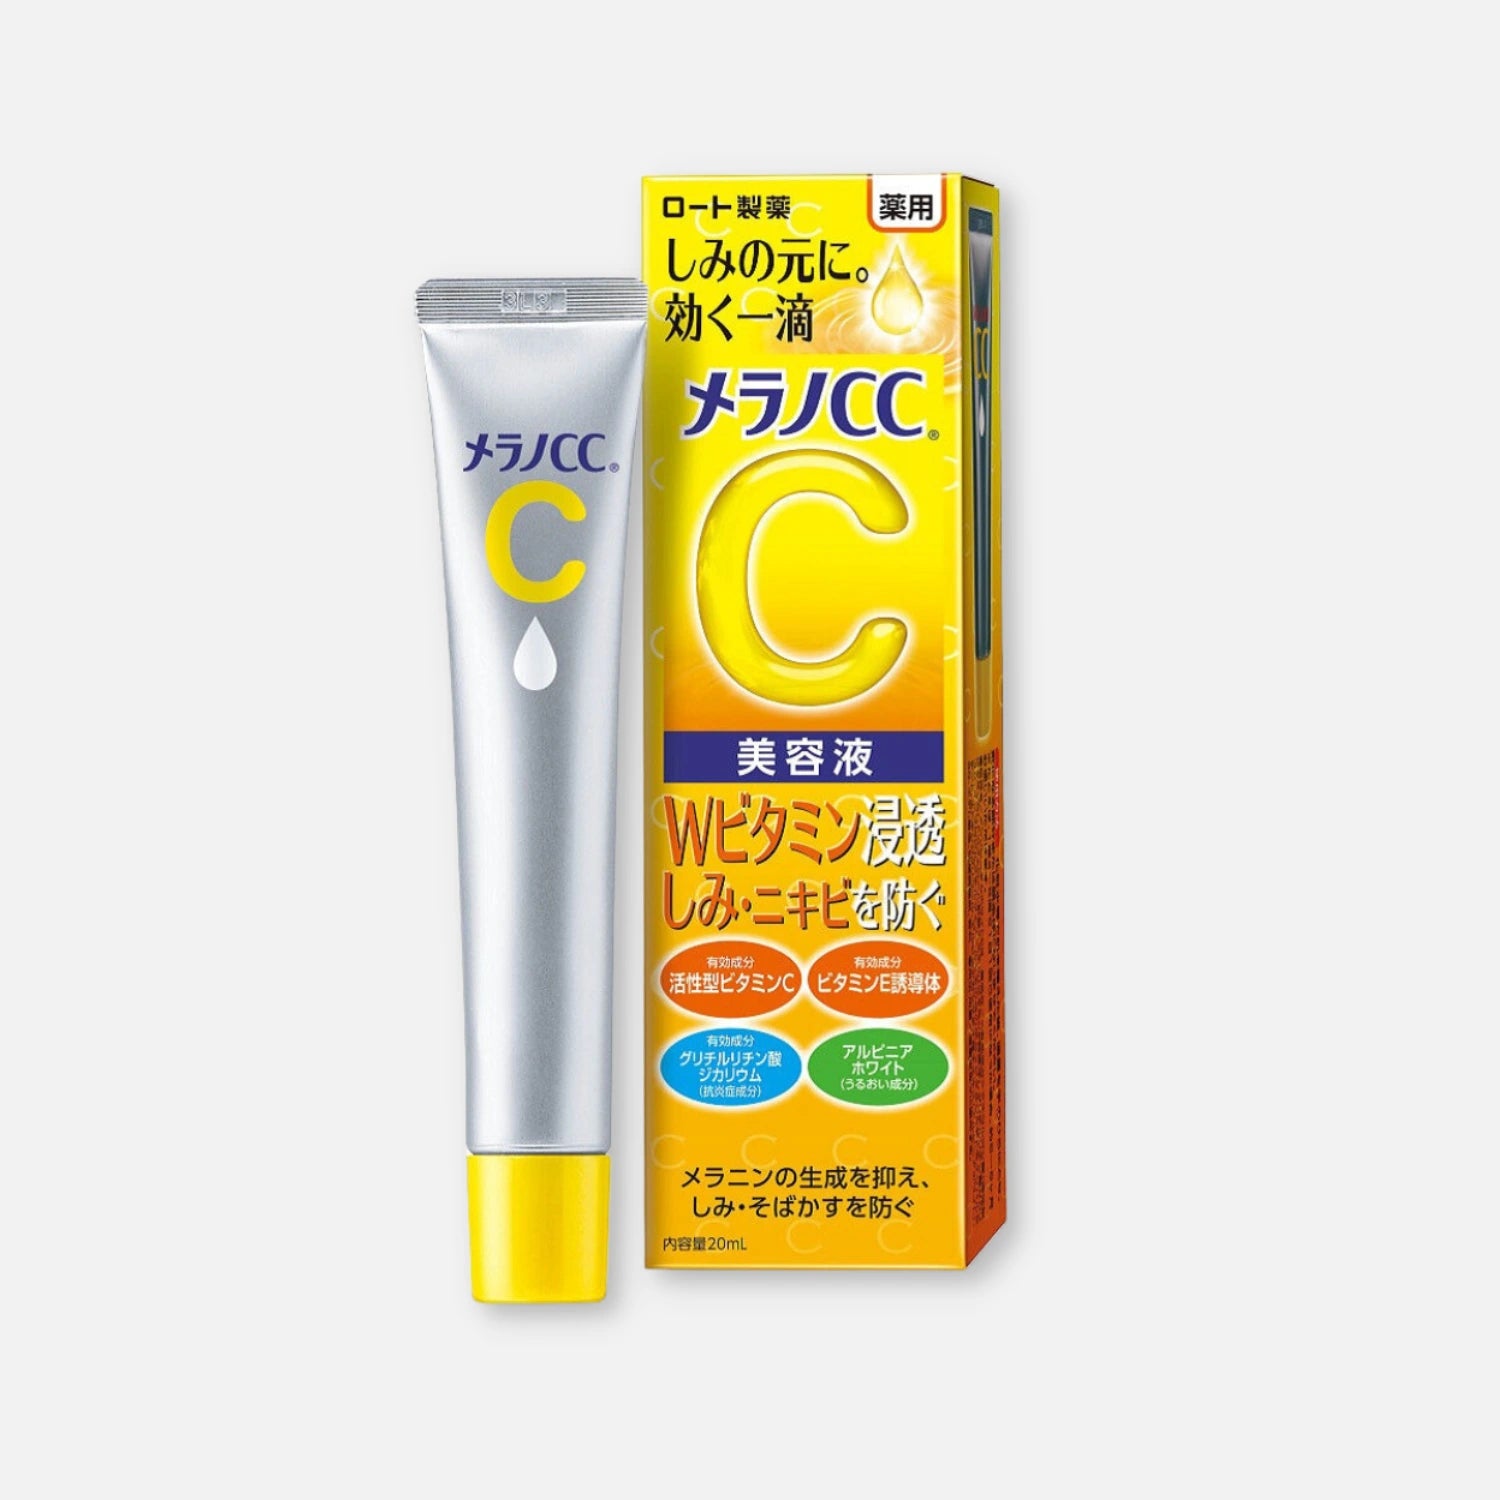 Melano　Japan　Buy　20ml　C　CC　–　Me　Vitamin　Essence